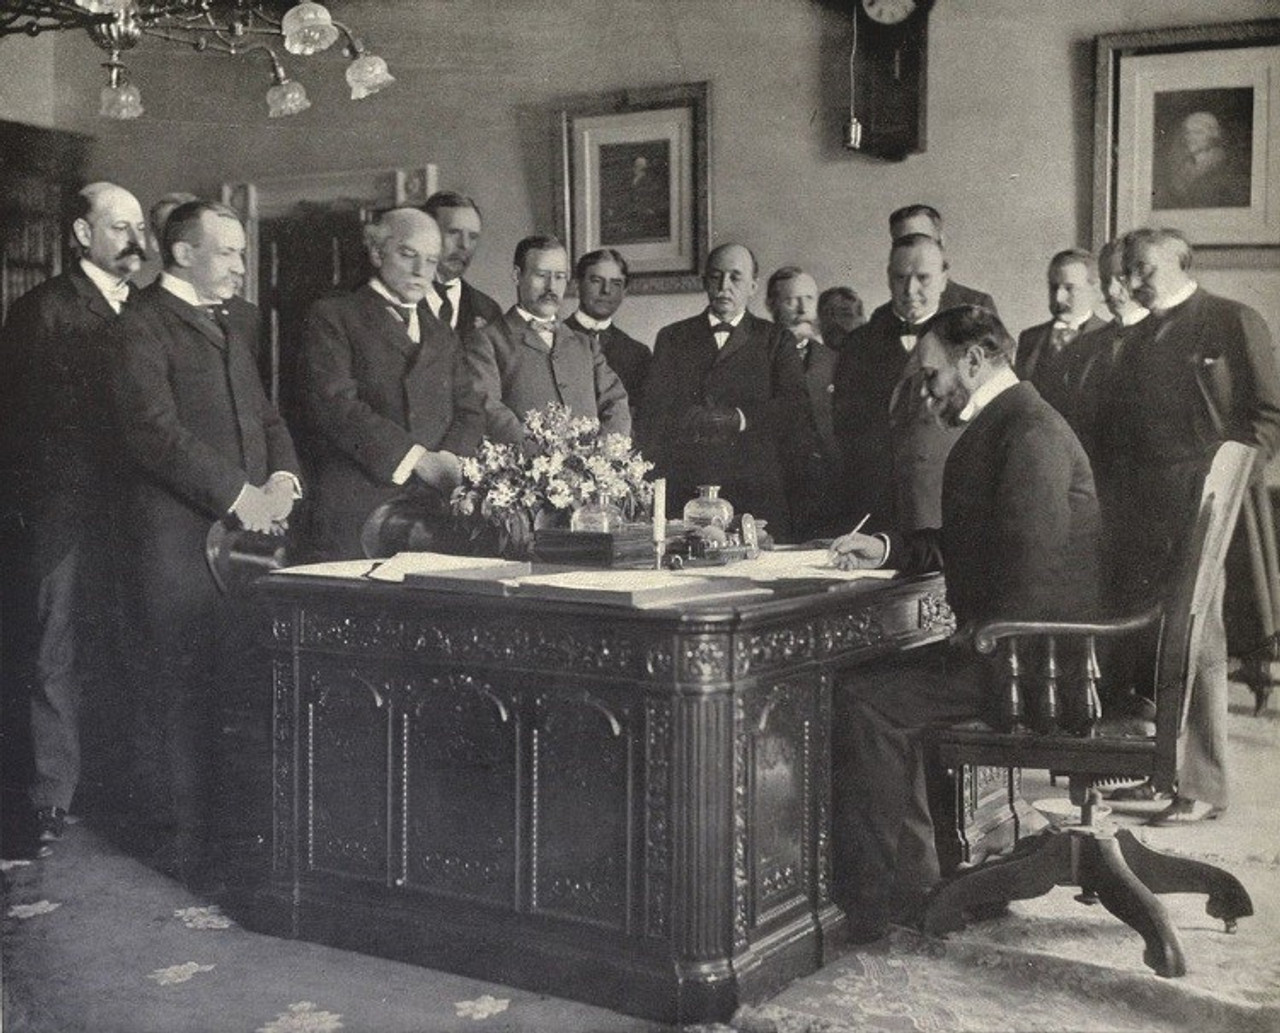 Signing the Treaty of Paris